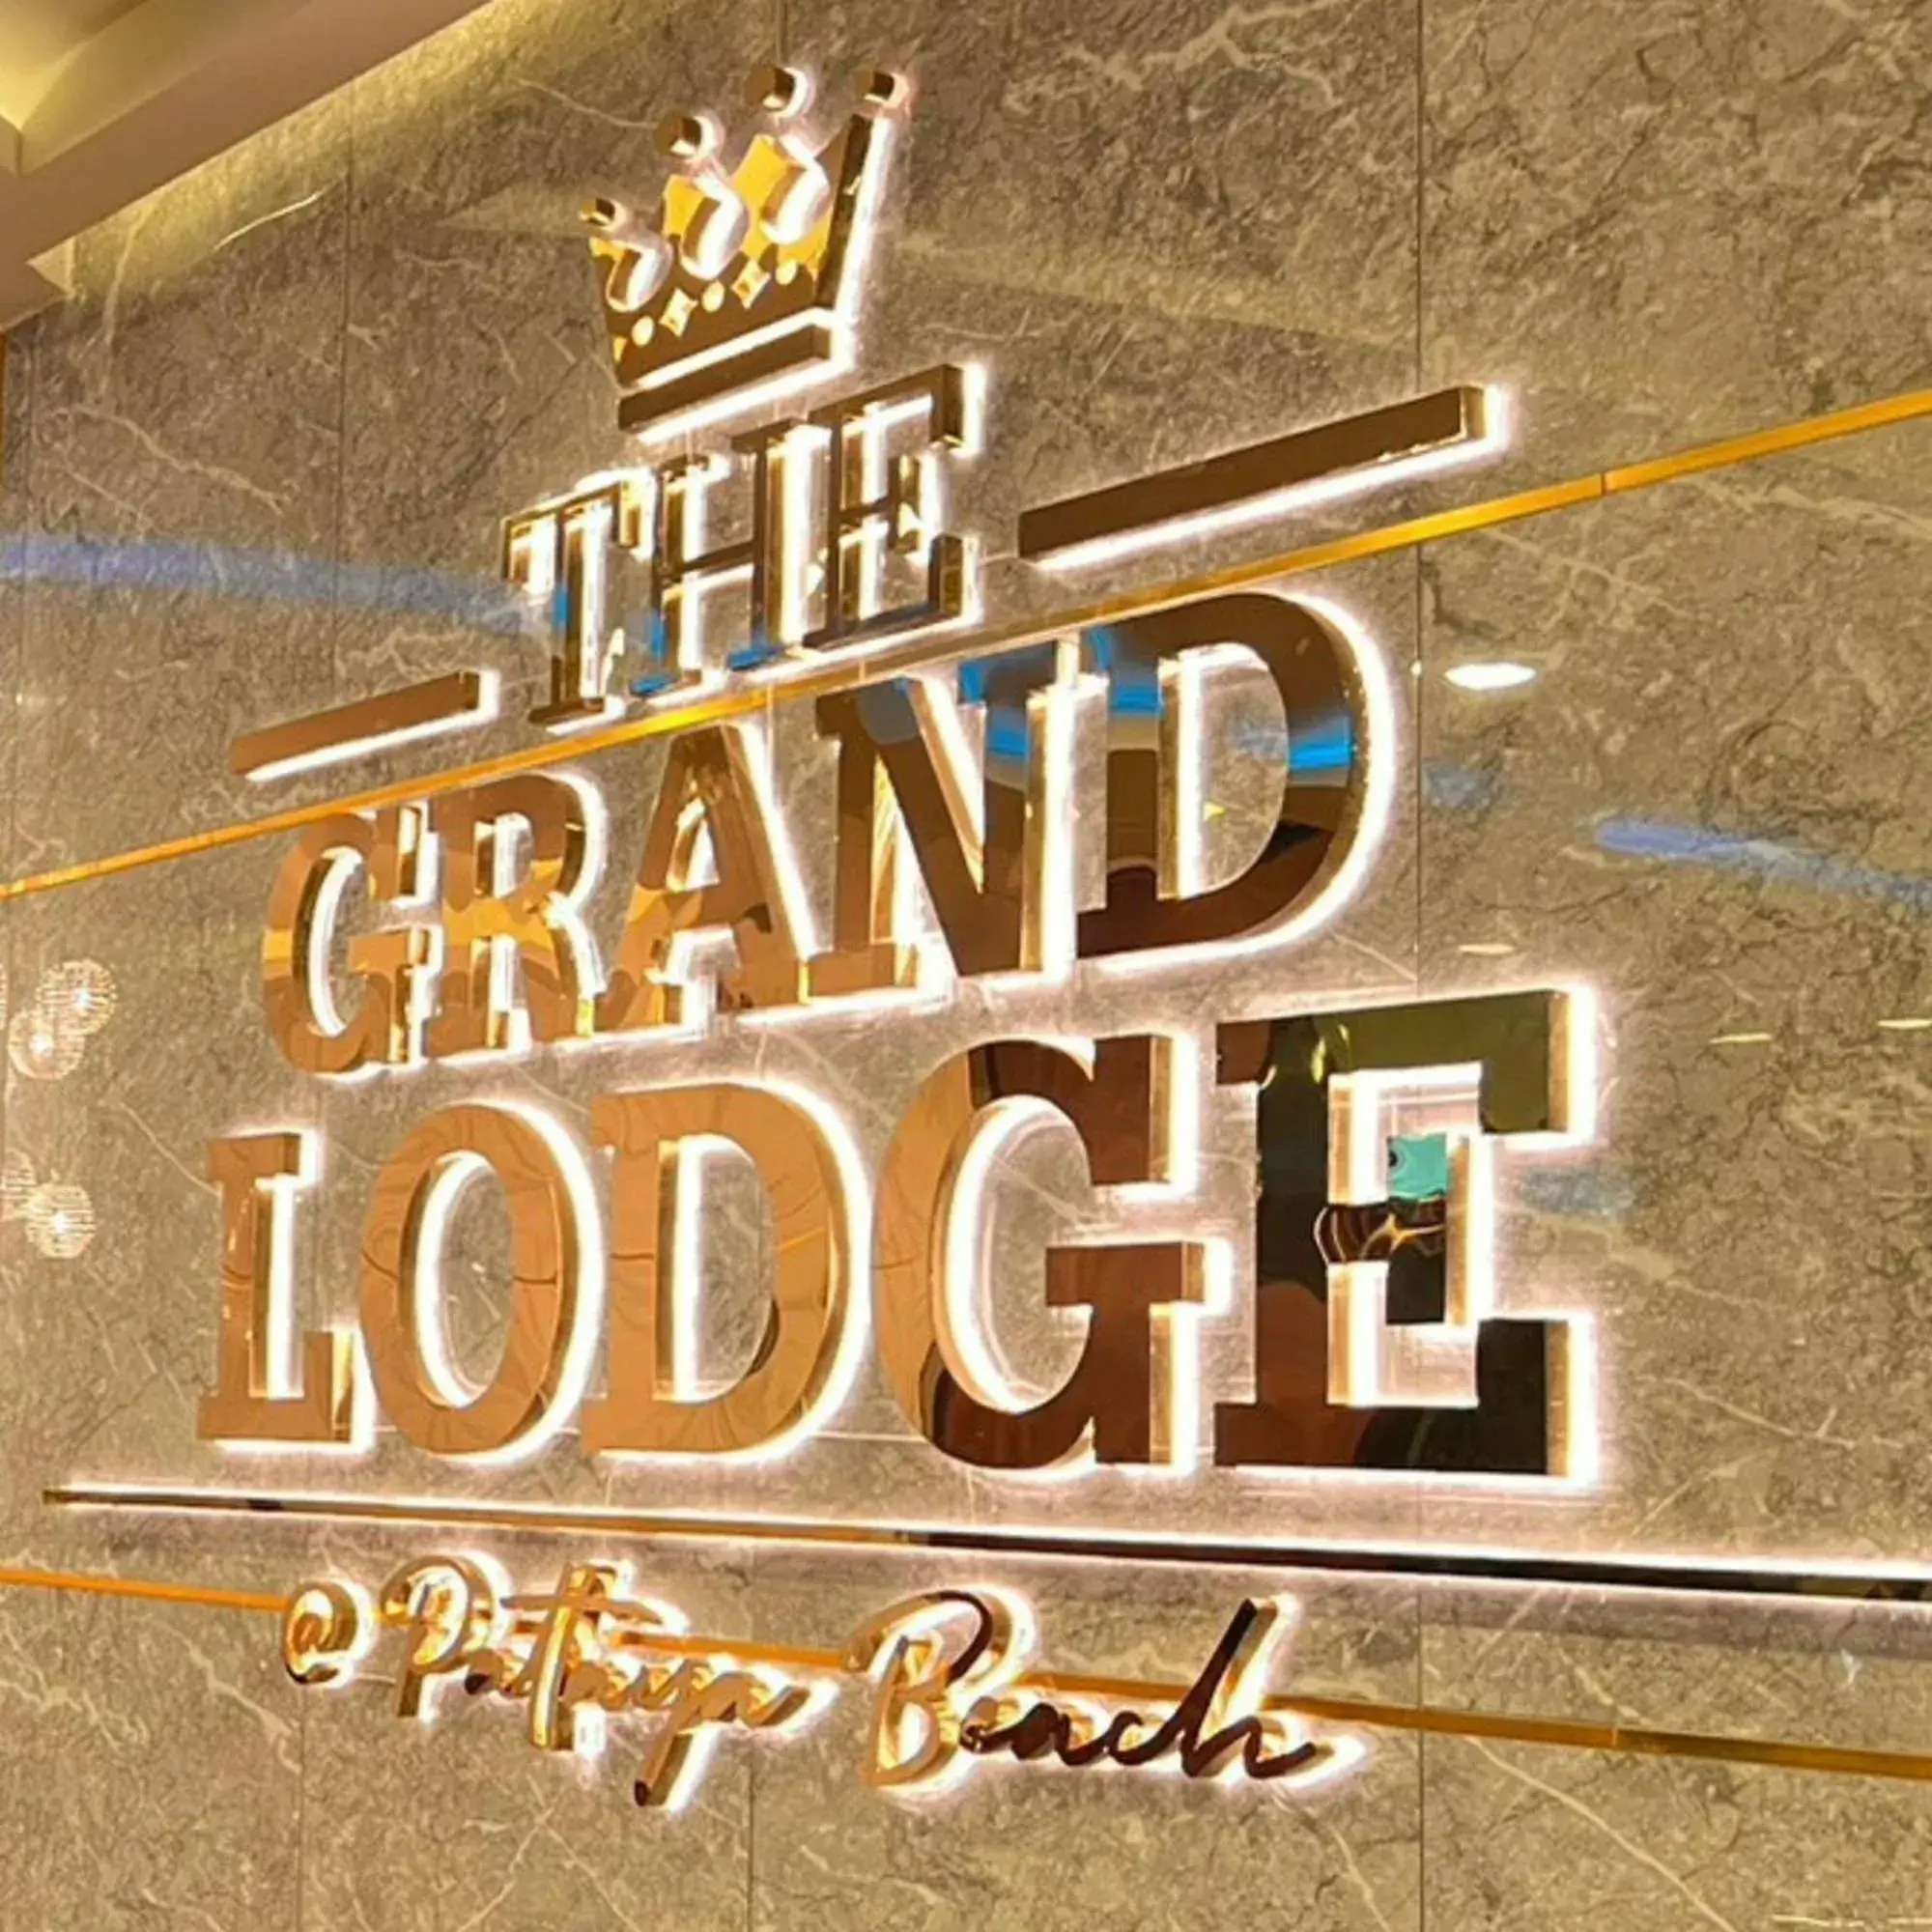 Logo/Certificate/Sign in The Privi Hotel